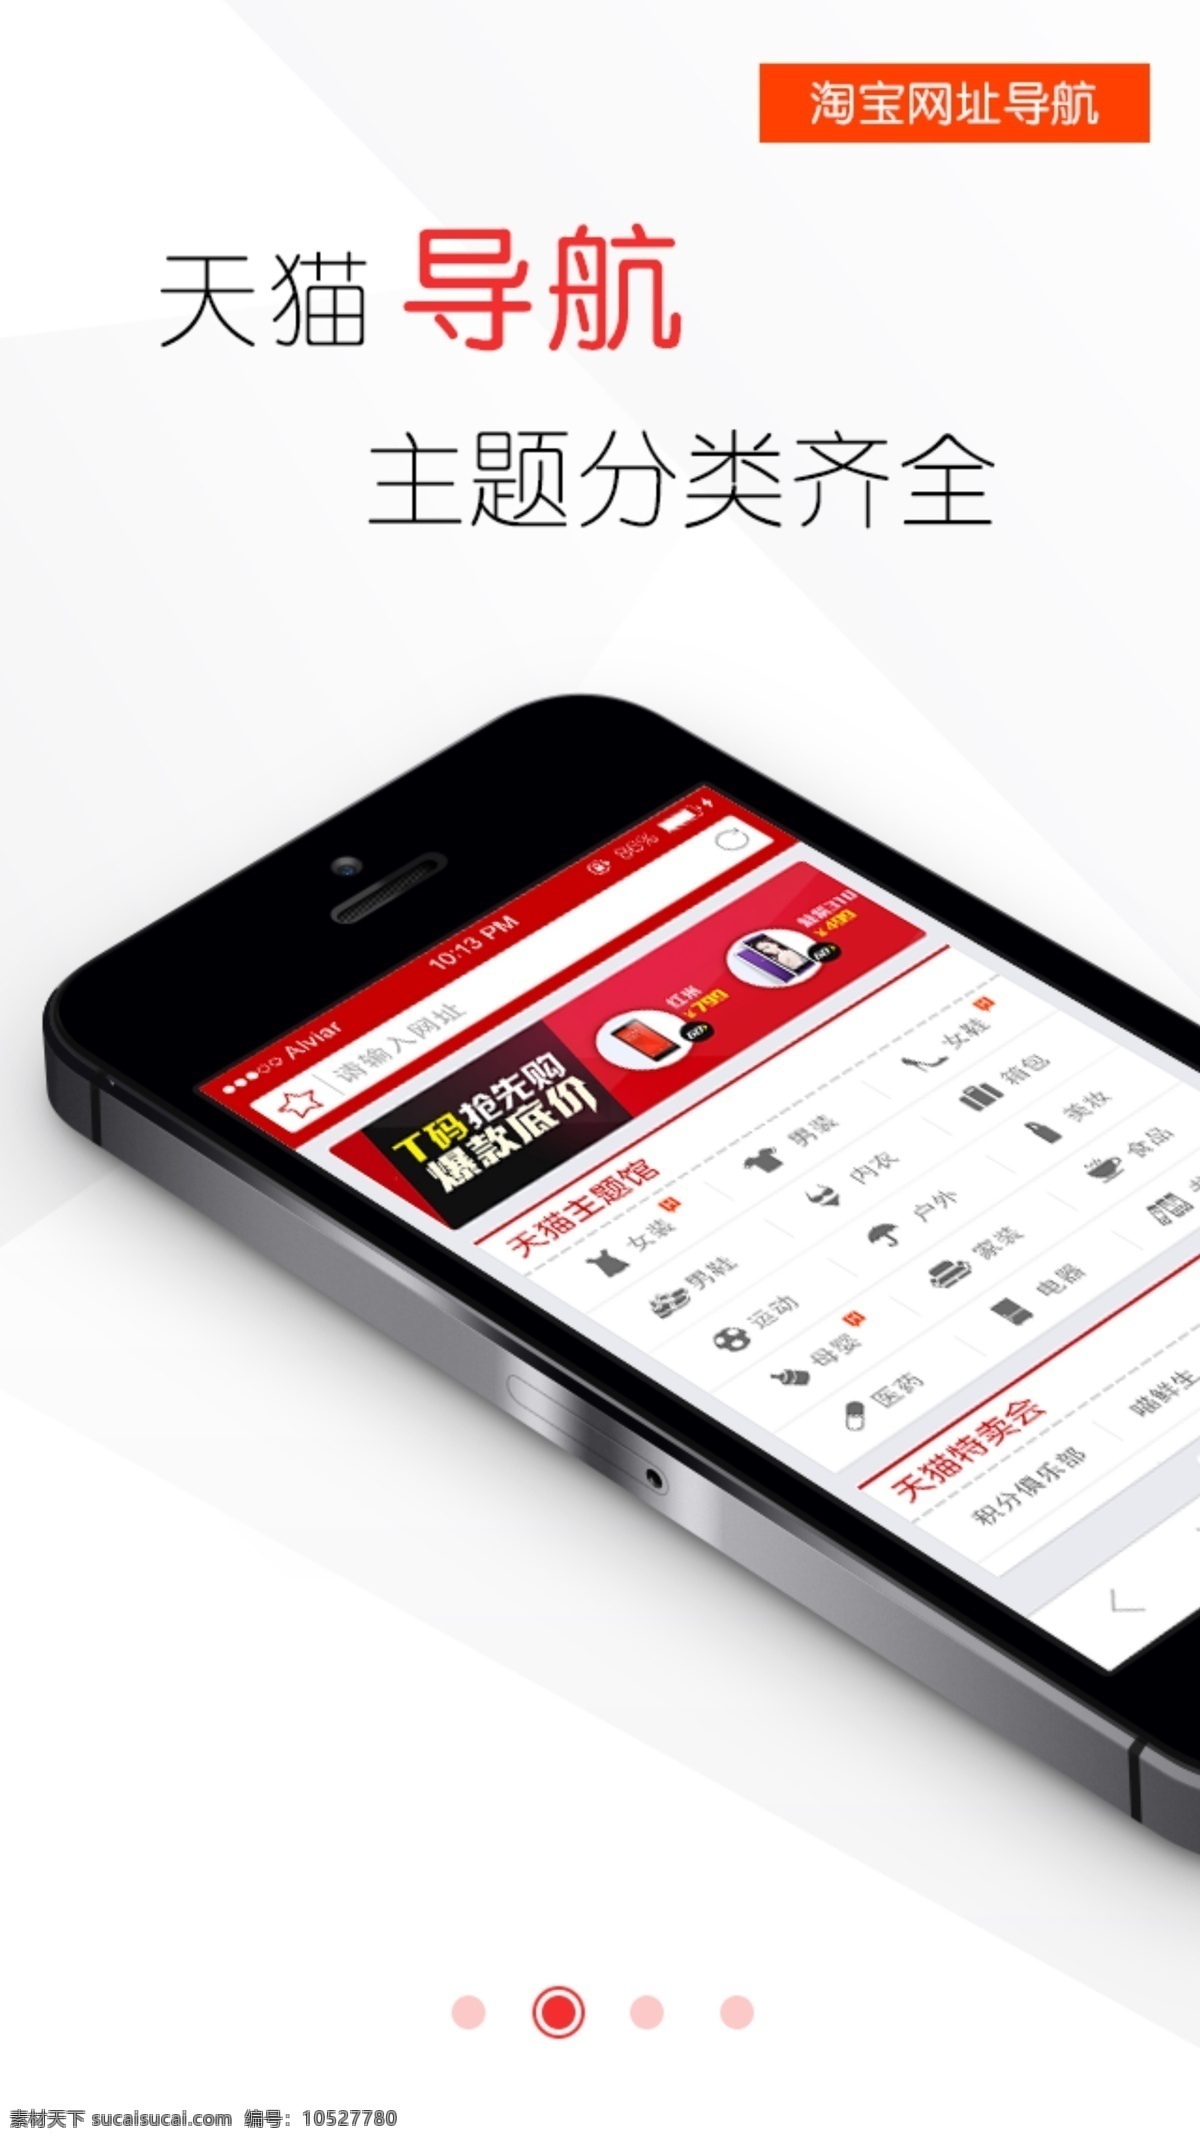 app 引导图 iphone5 手机 淘宝网 天猫 分类 pad源文件